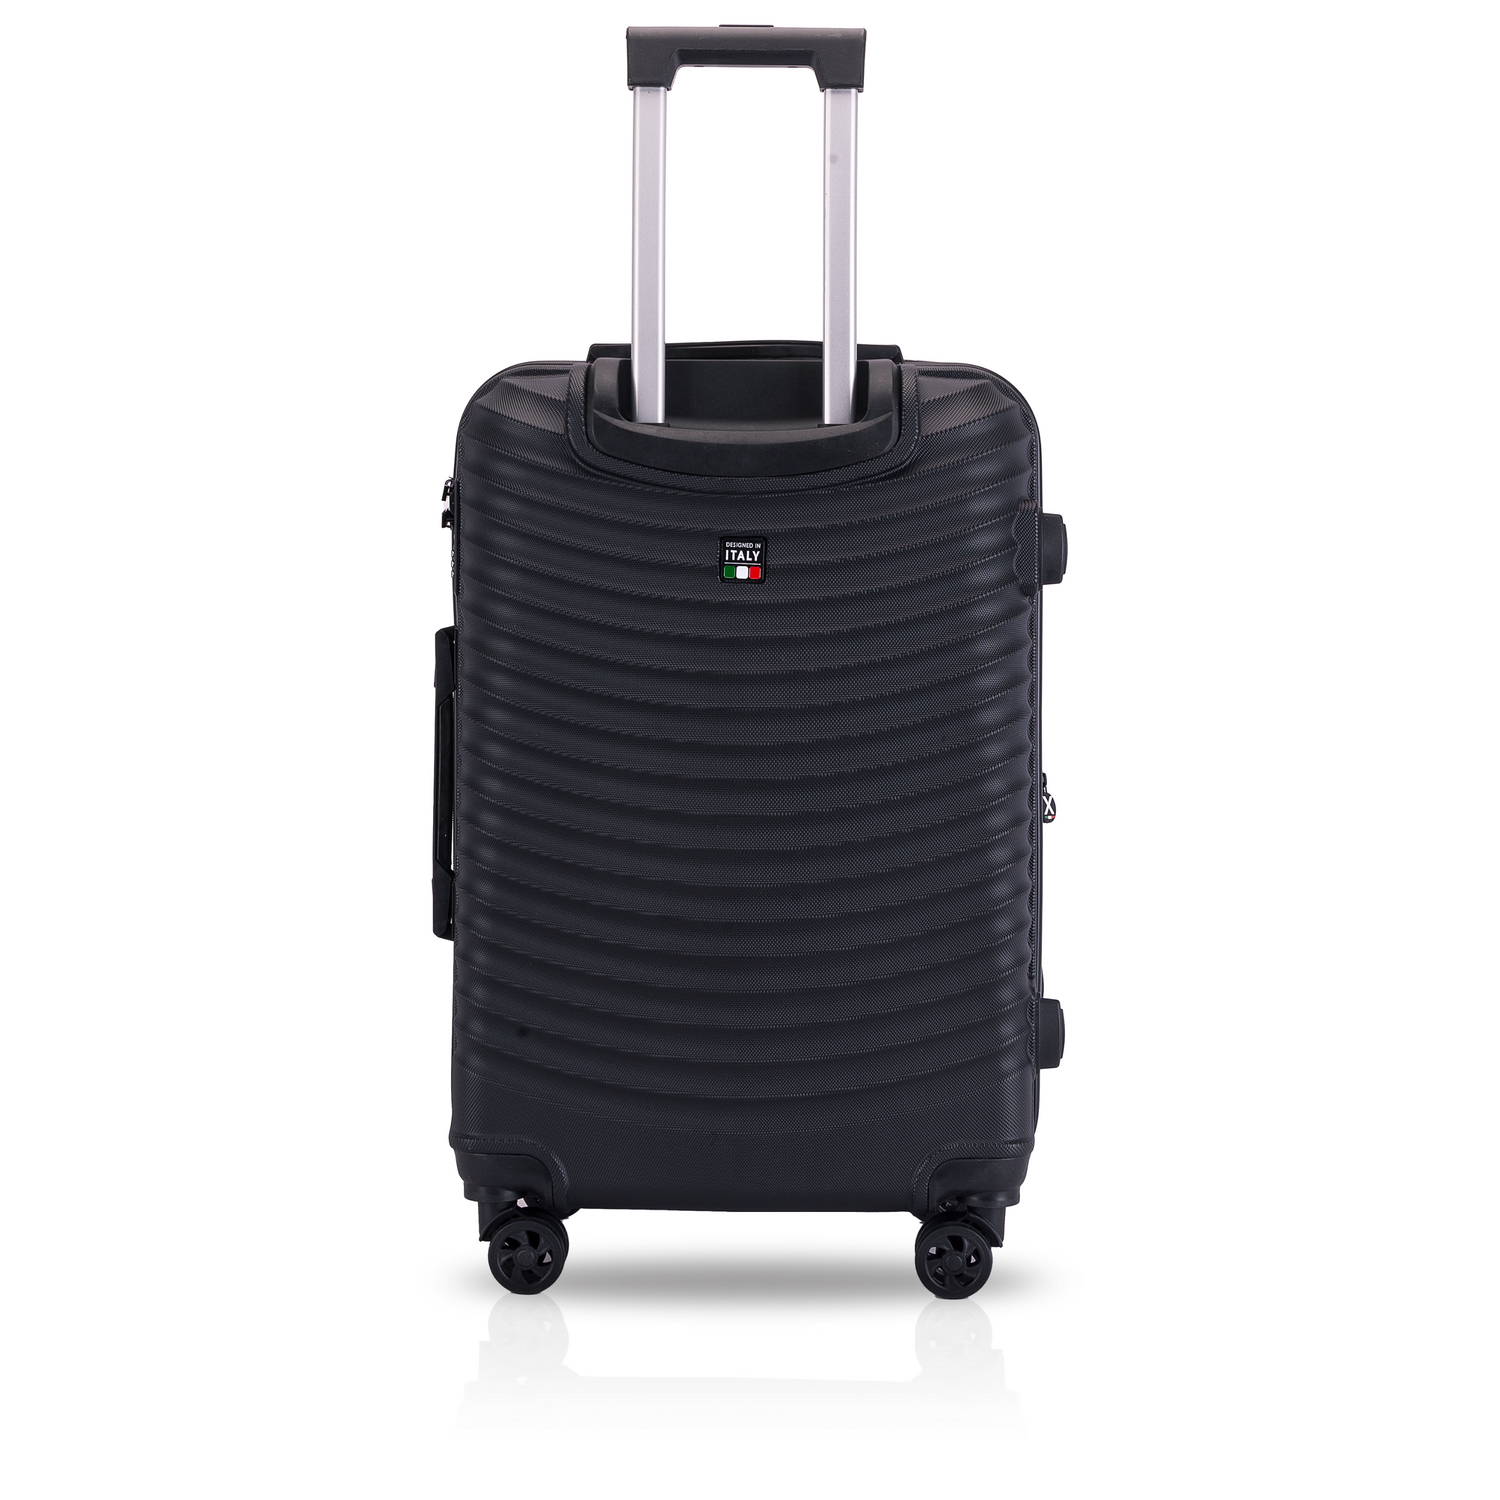 TUCCI Italy FLETTERE 28" Large Travel Luggage Suitcase